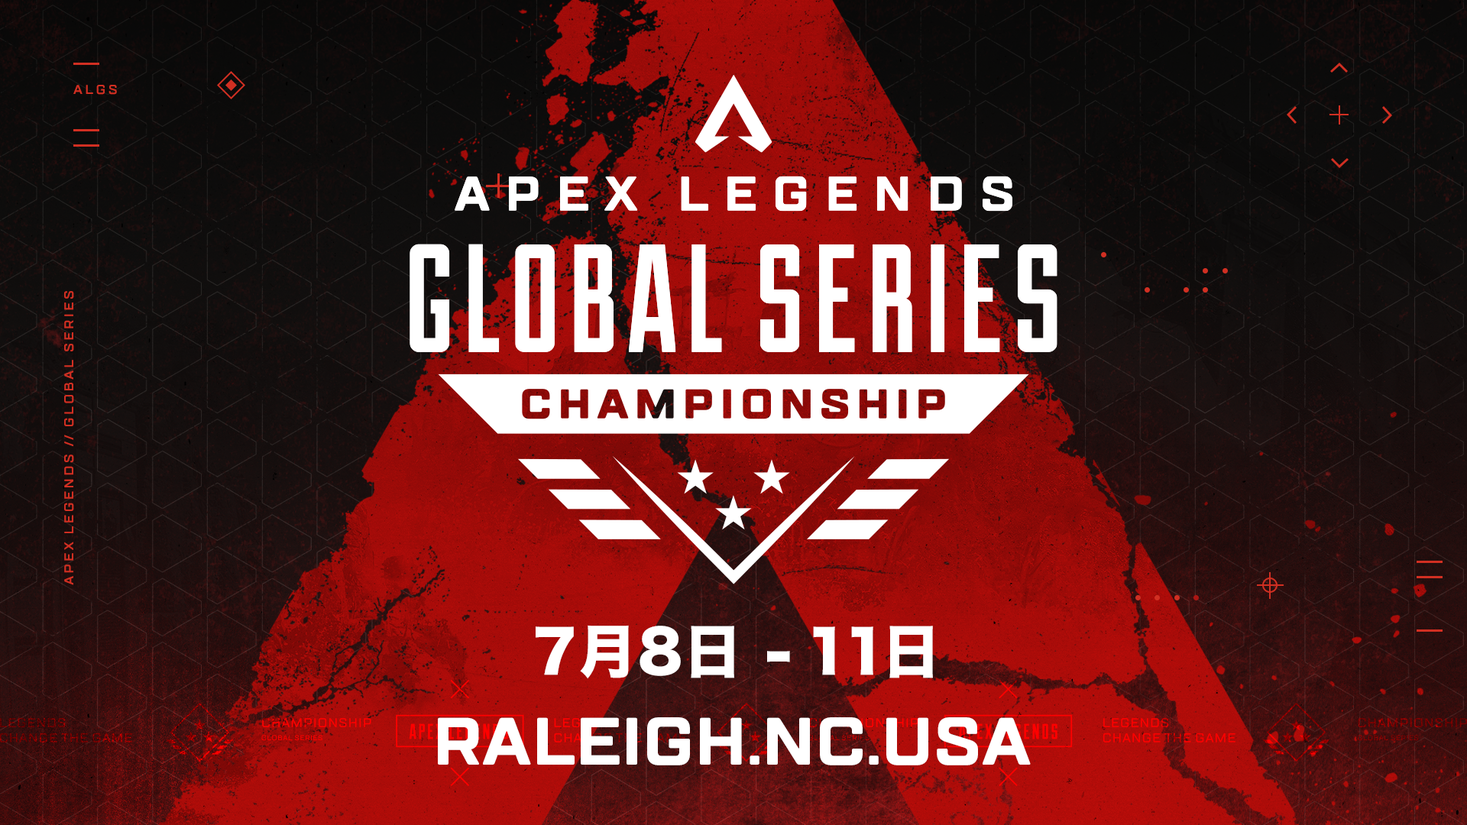 「Apex Legends Global Series Championship」日本時間7月8日〜11日にアメリカ・ノースカロライナ州